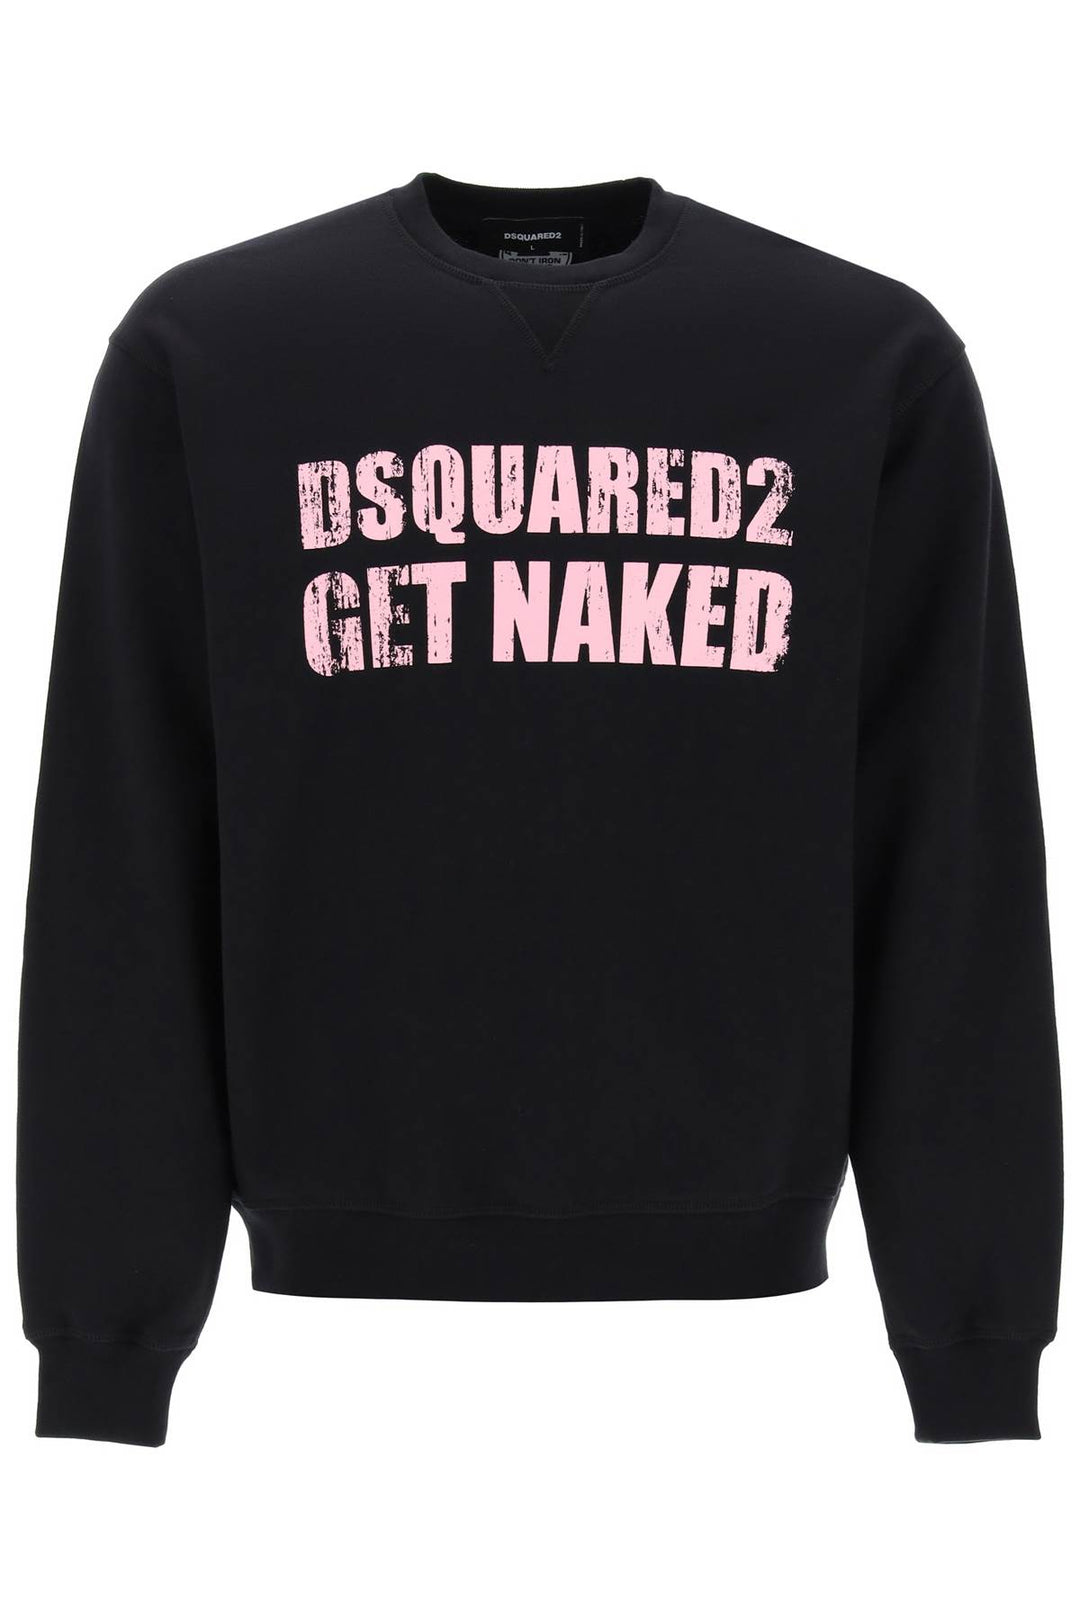 Dsquared2 Cool Fit Printed Sweatshirt   Nero